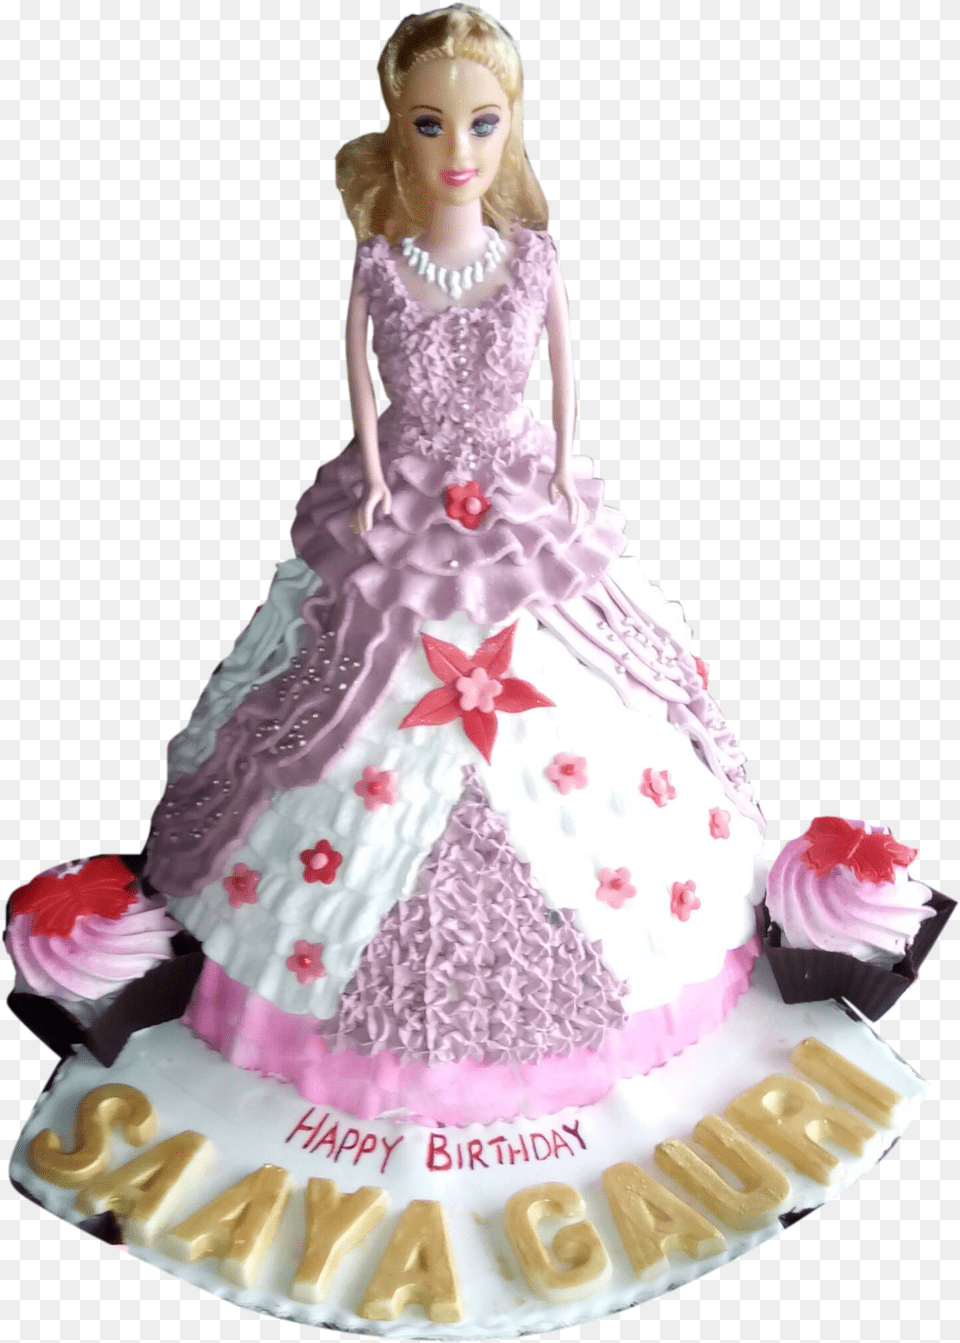 Barbie Doll Cake Pink Amp White Le Torta Cake Shop Aluva Happy Birthday Cake Barbie Doll, Figurine, Birthday Cake, Cream, Dessert Free Png Download